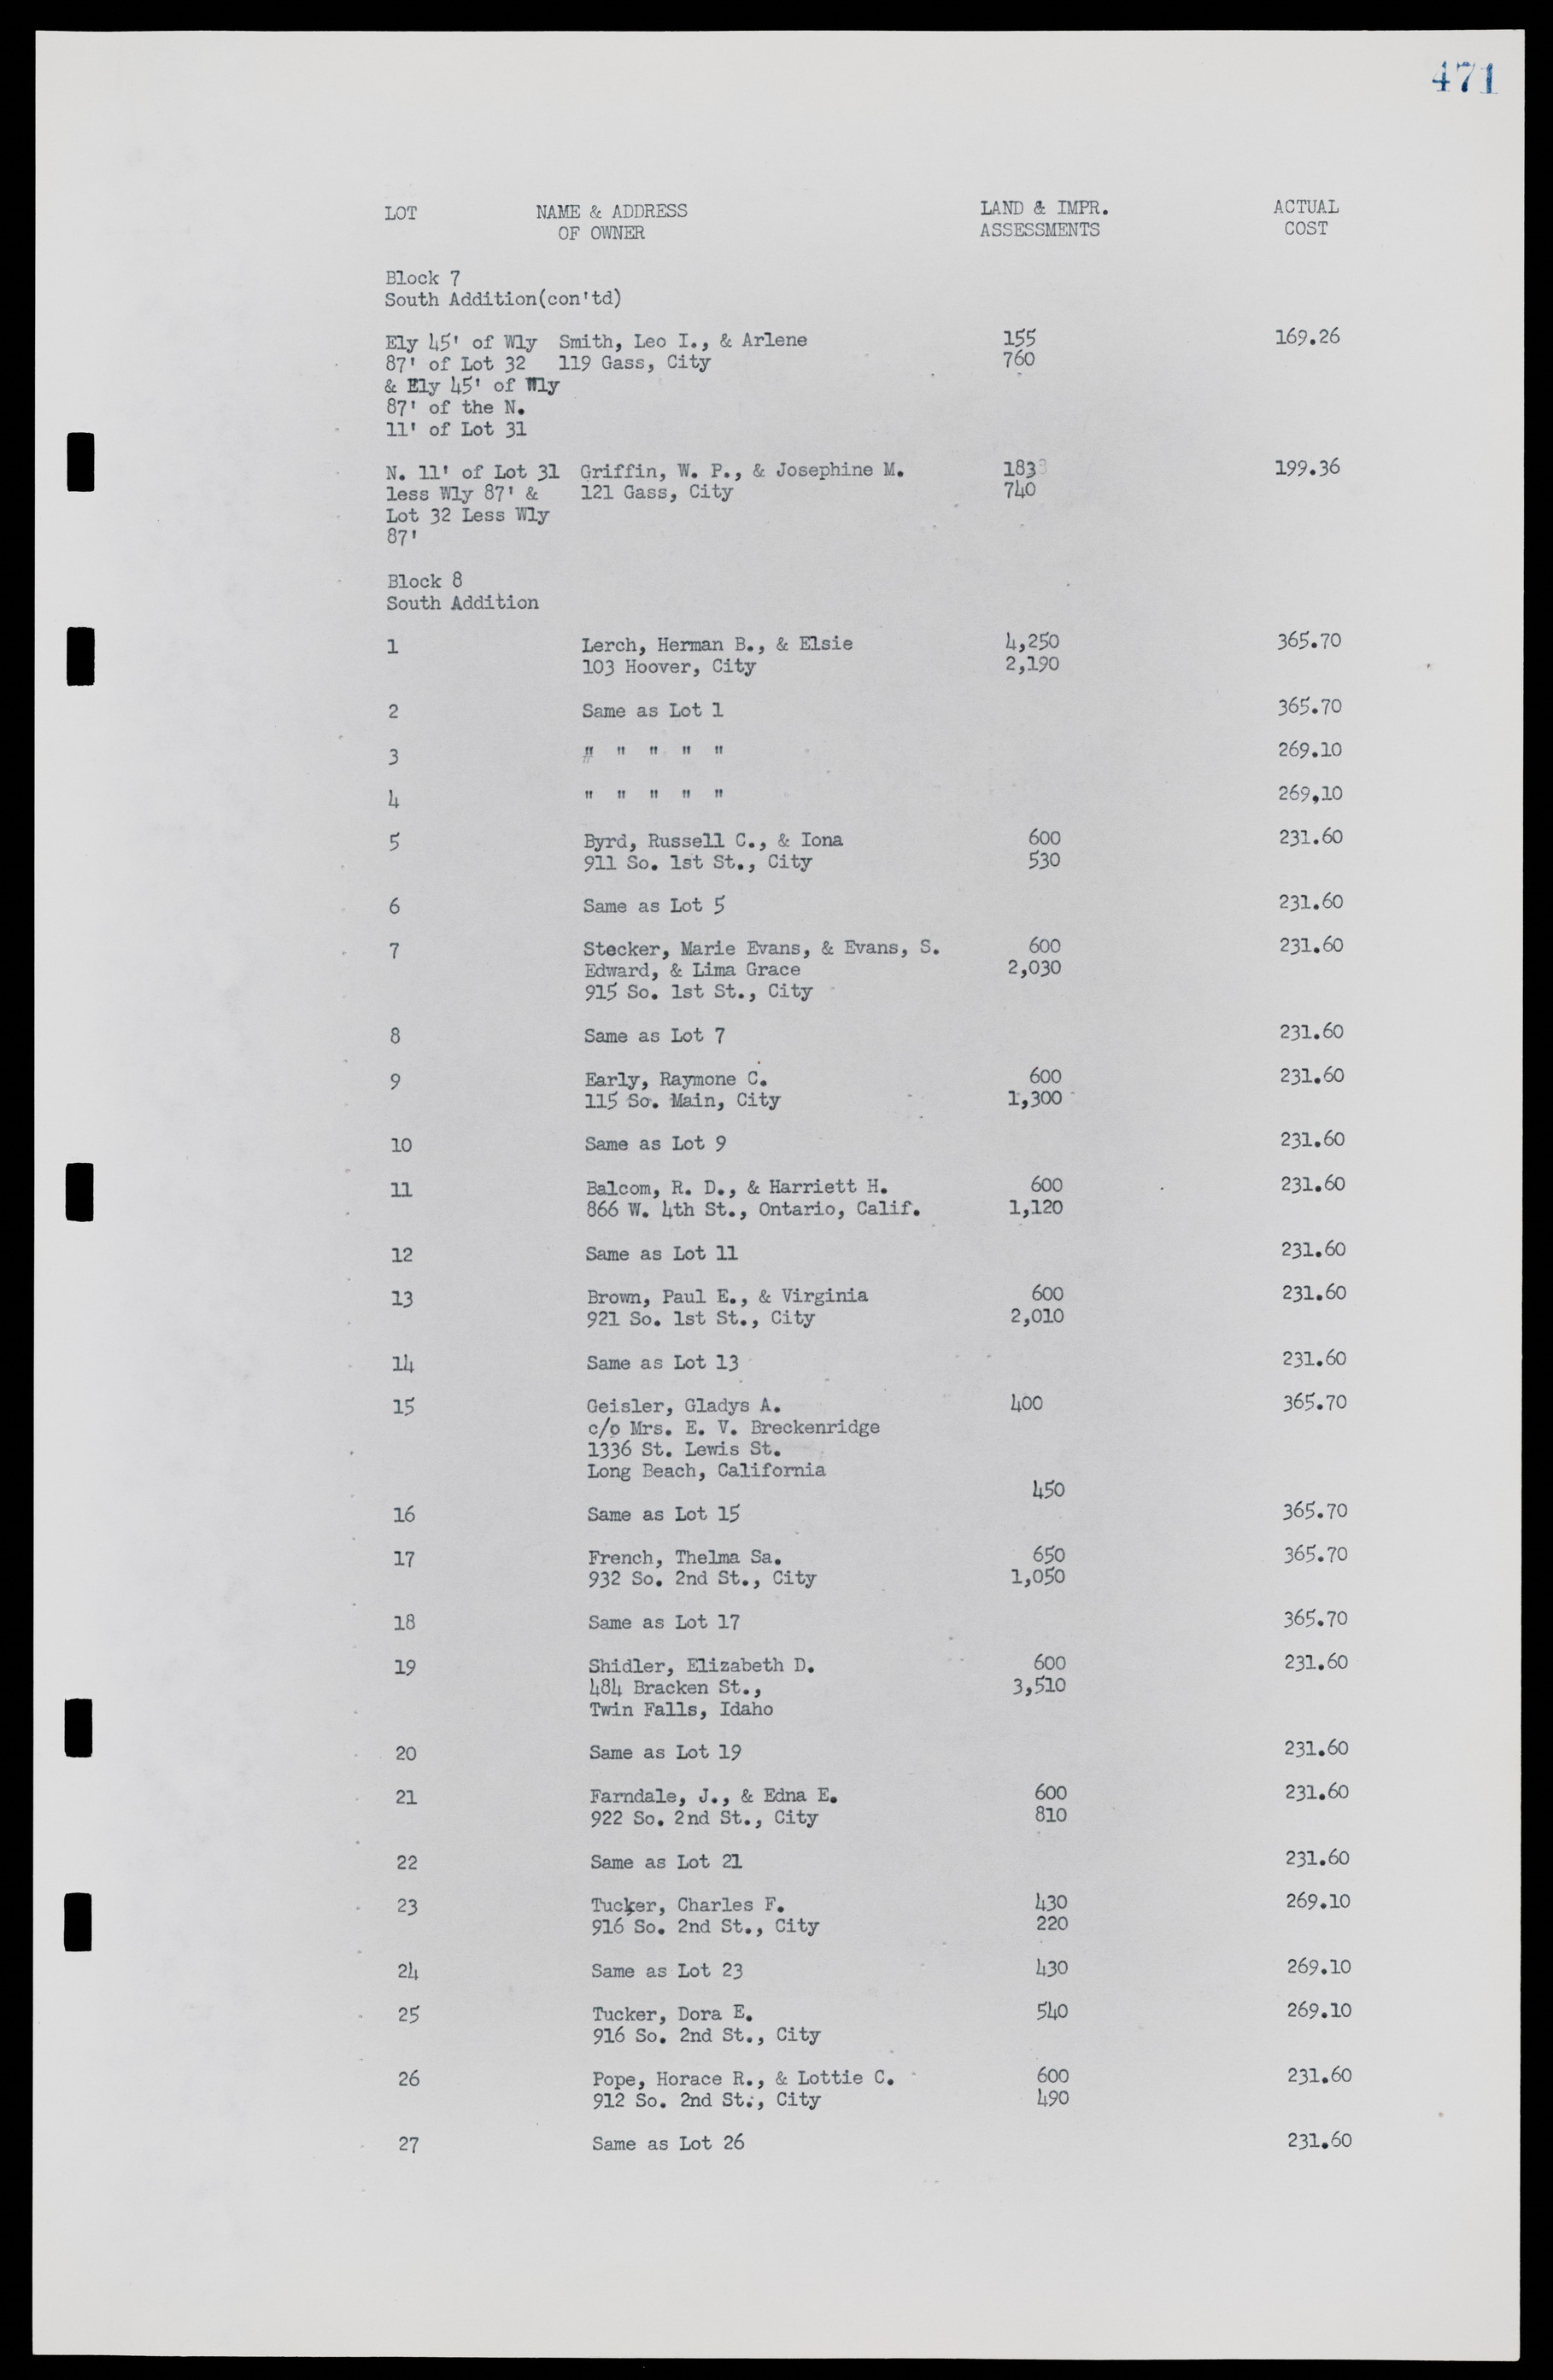 Las Vegas City Commission Minutes, November 7, 1949 to May 21, 1952, lvc000007-487